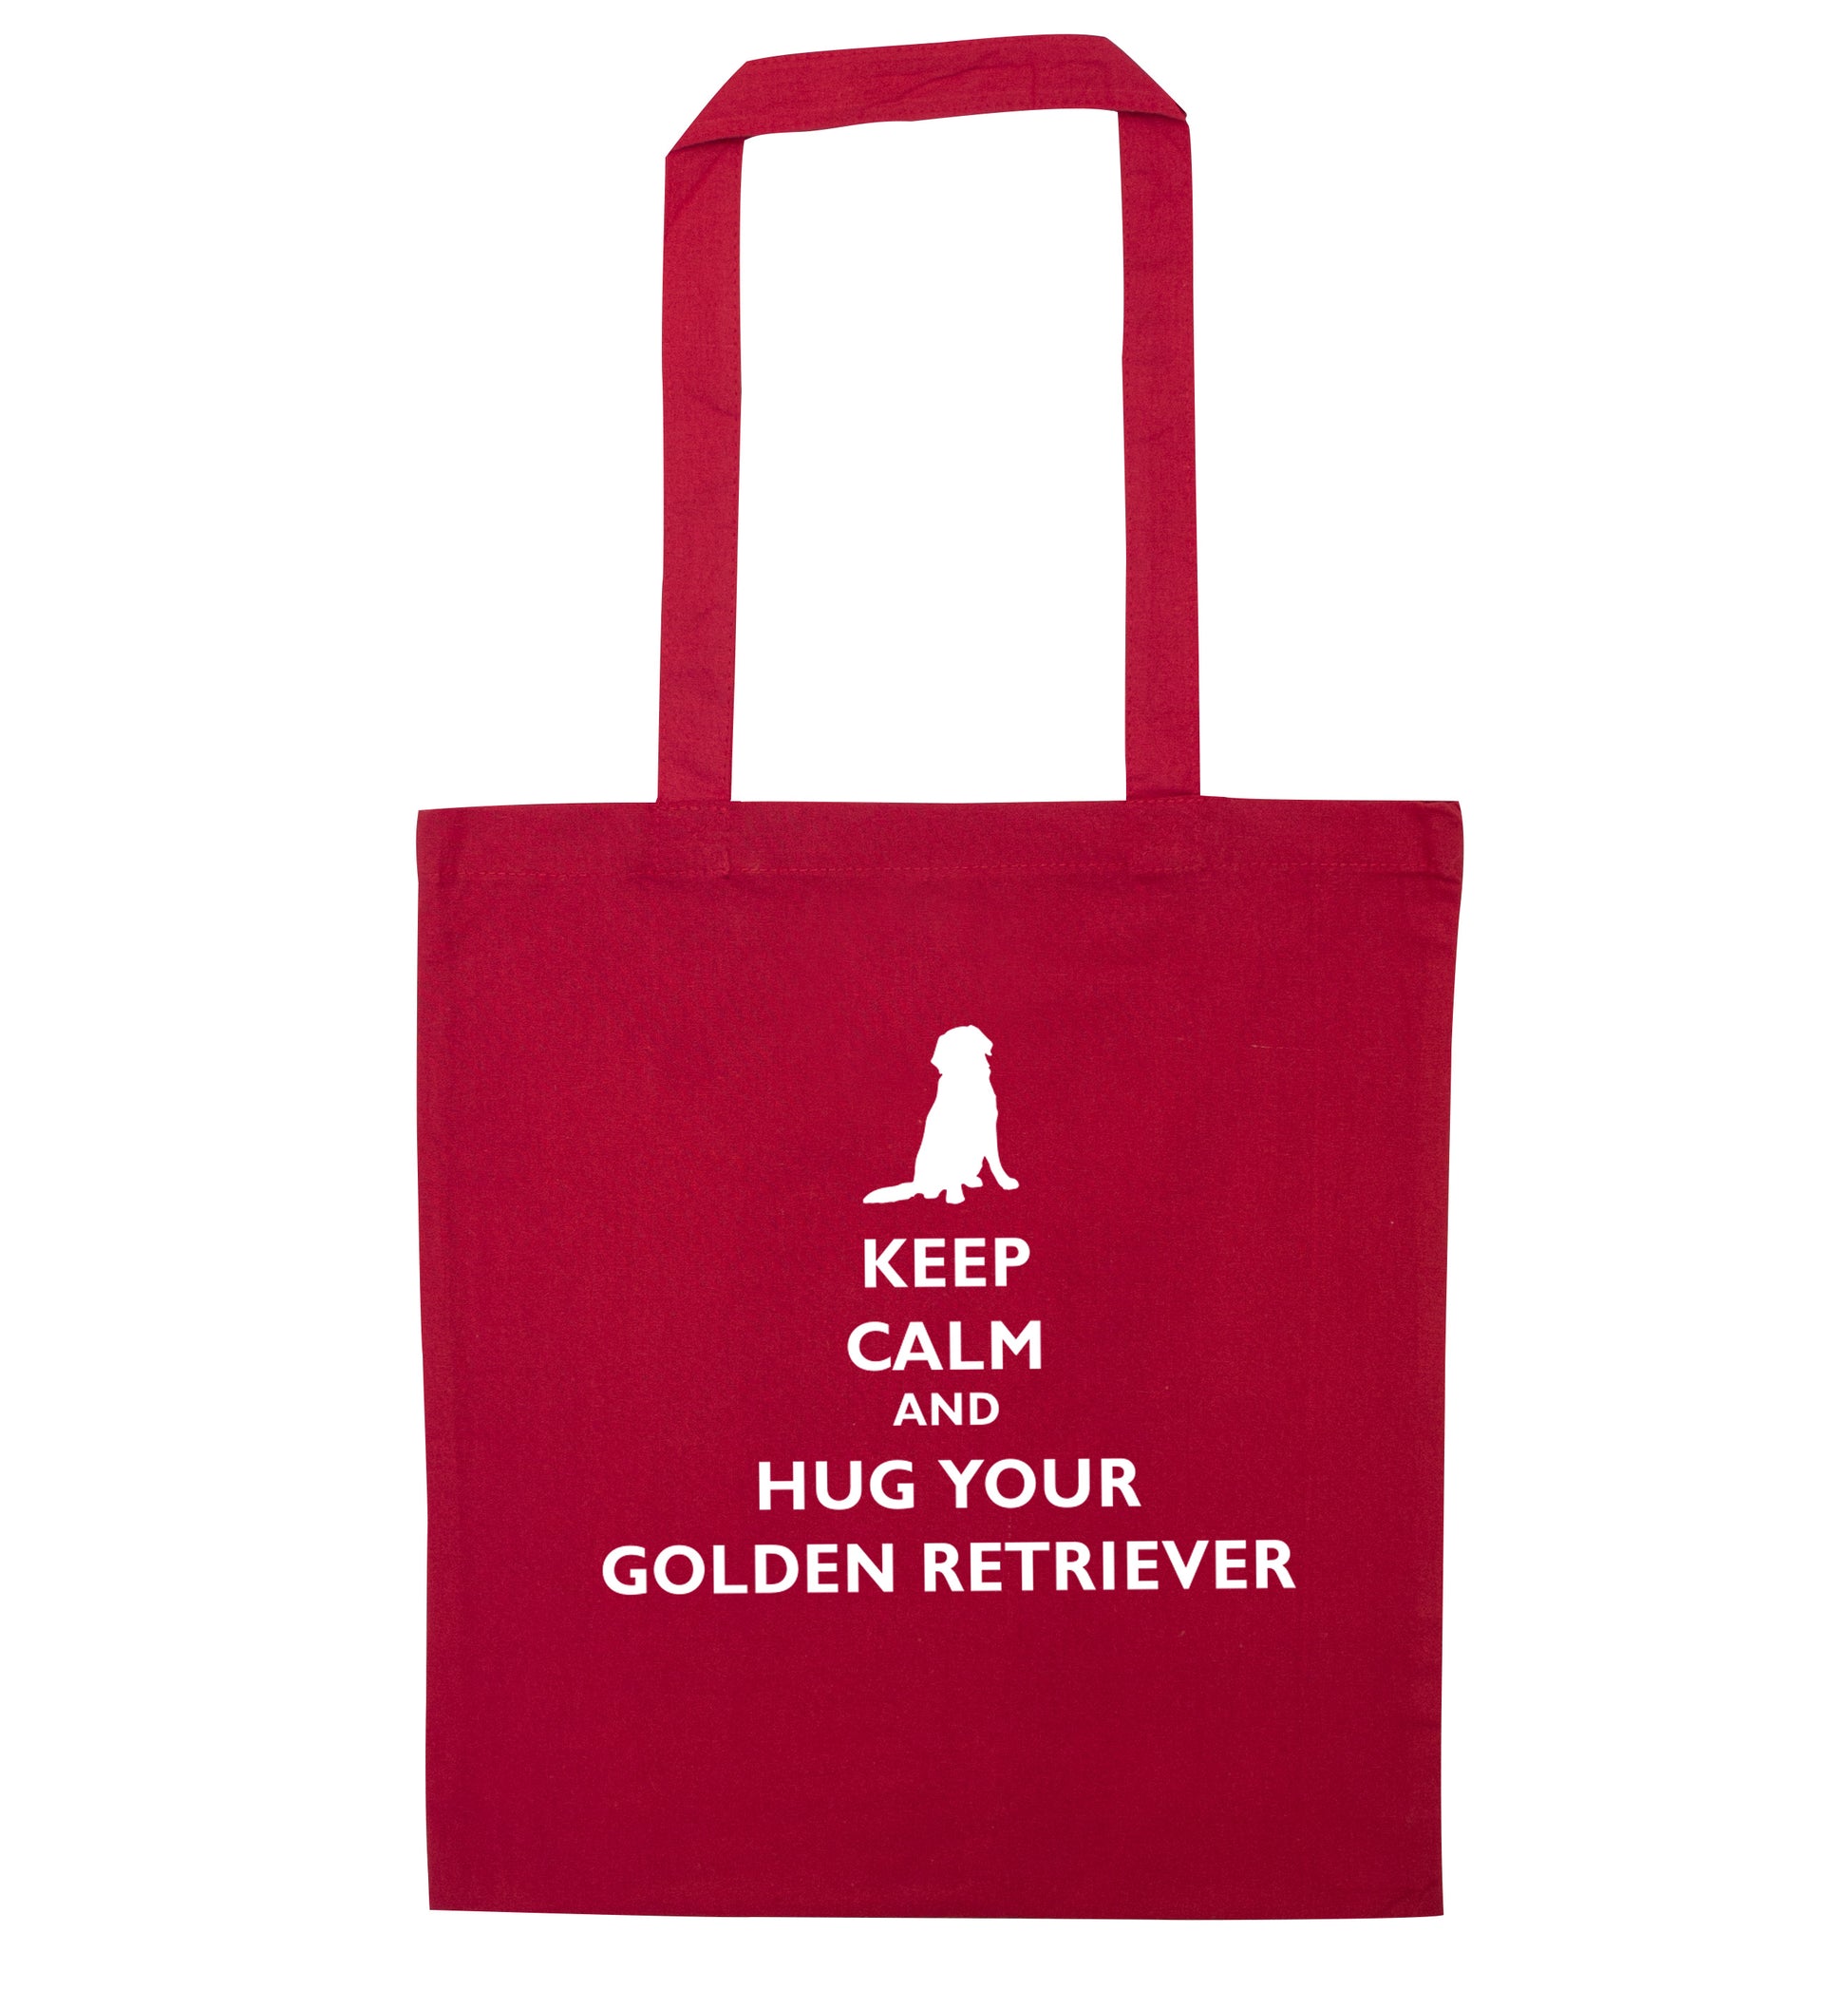 Keep calm and hug your golden retriever red tote bag